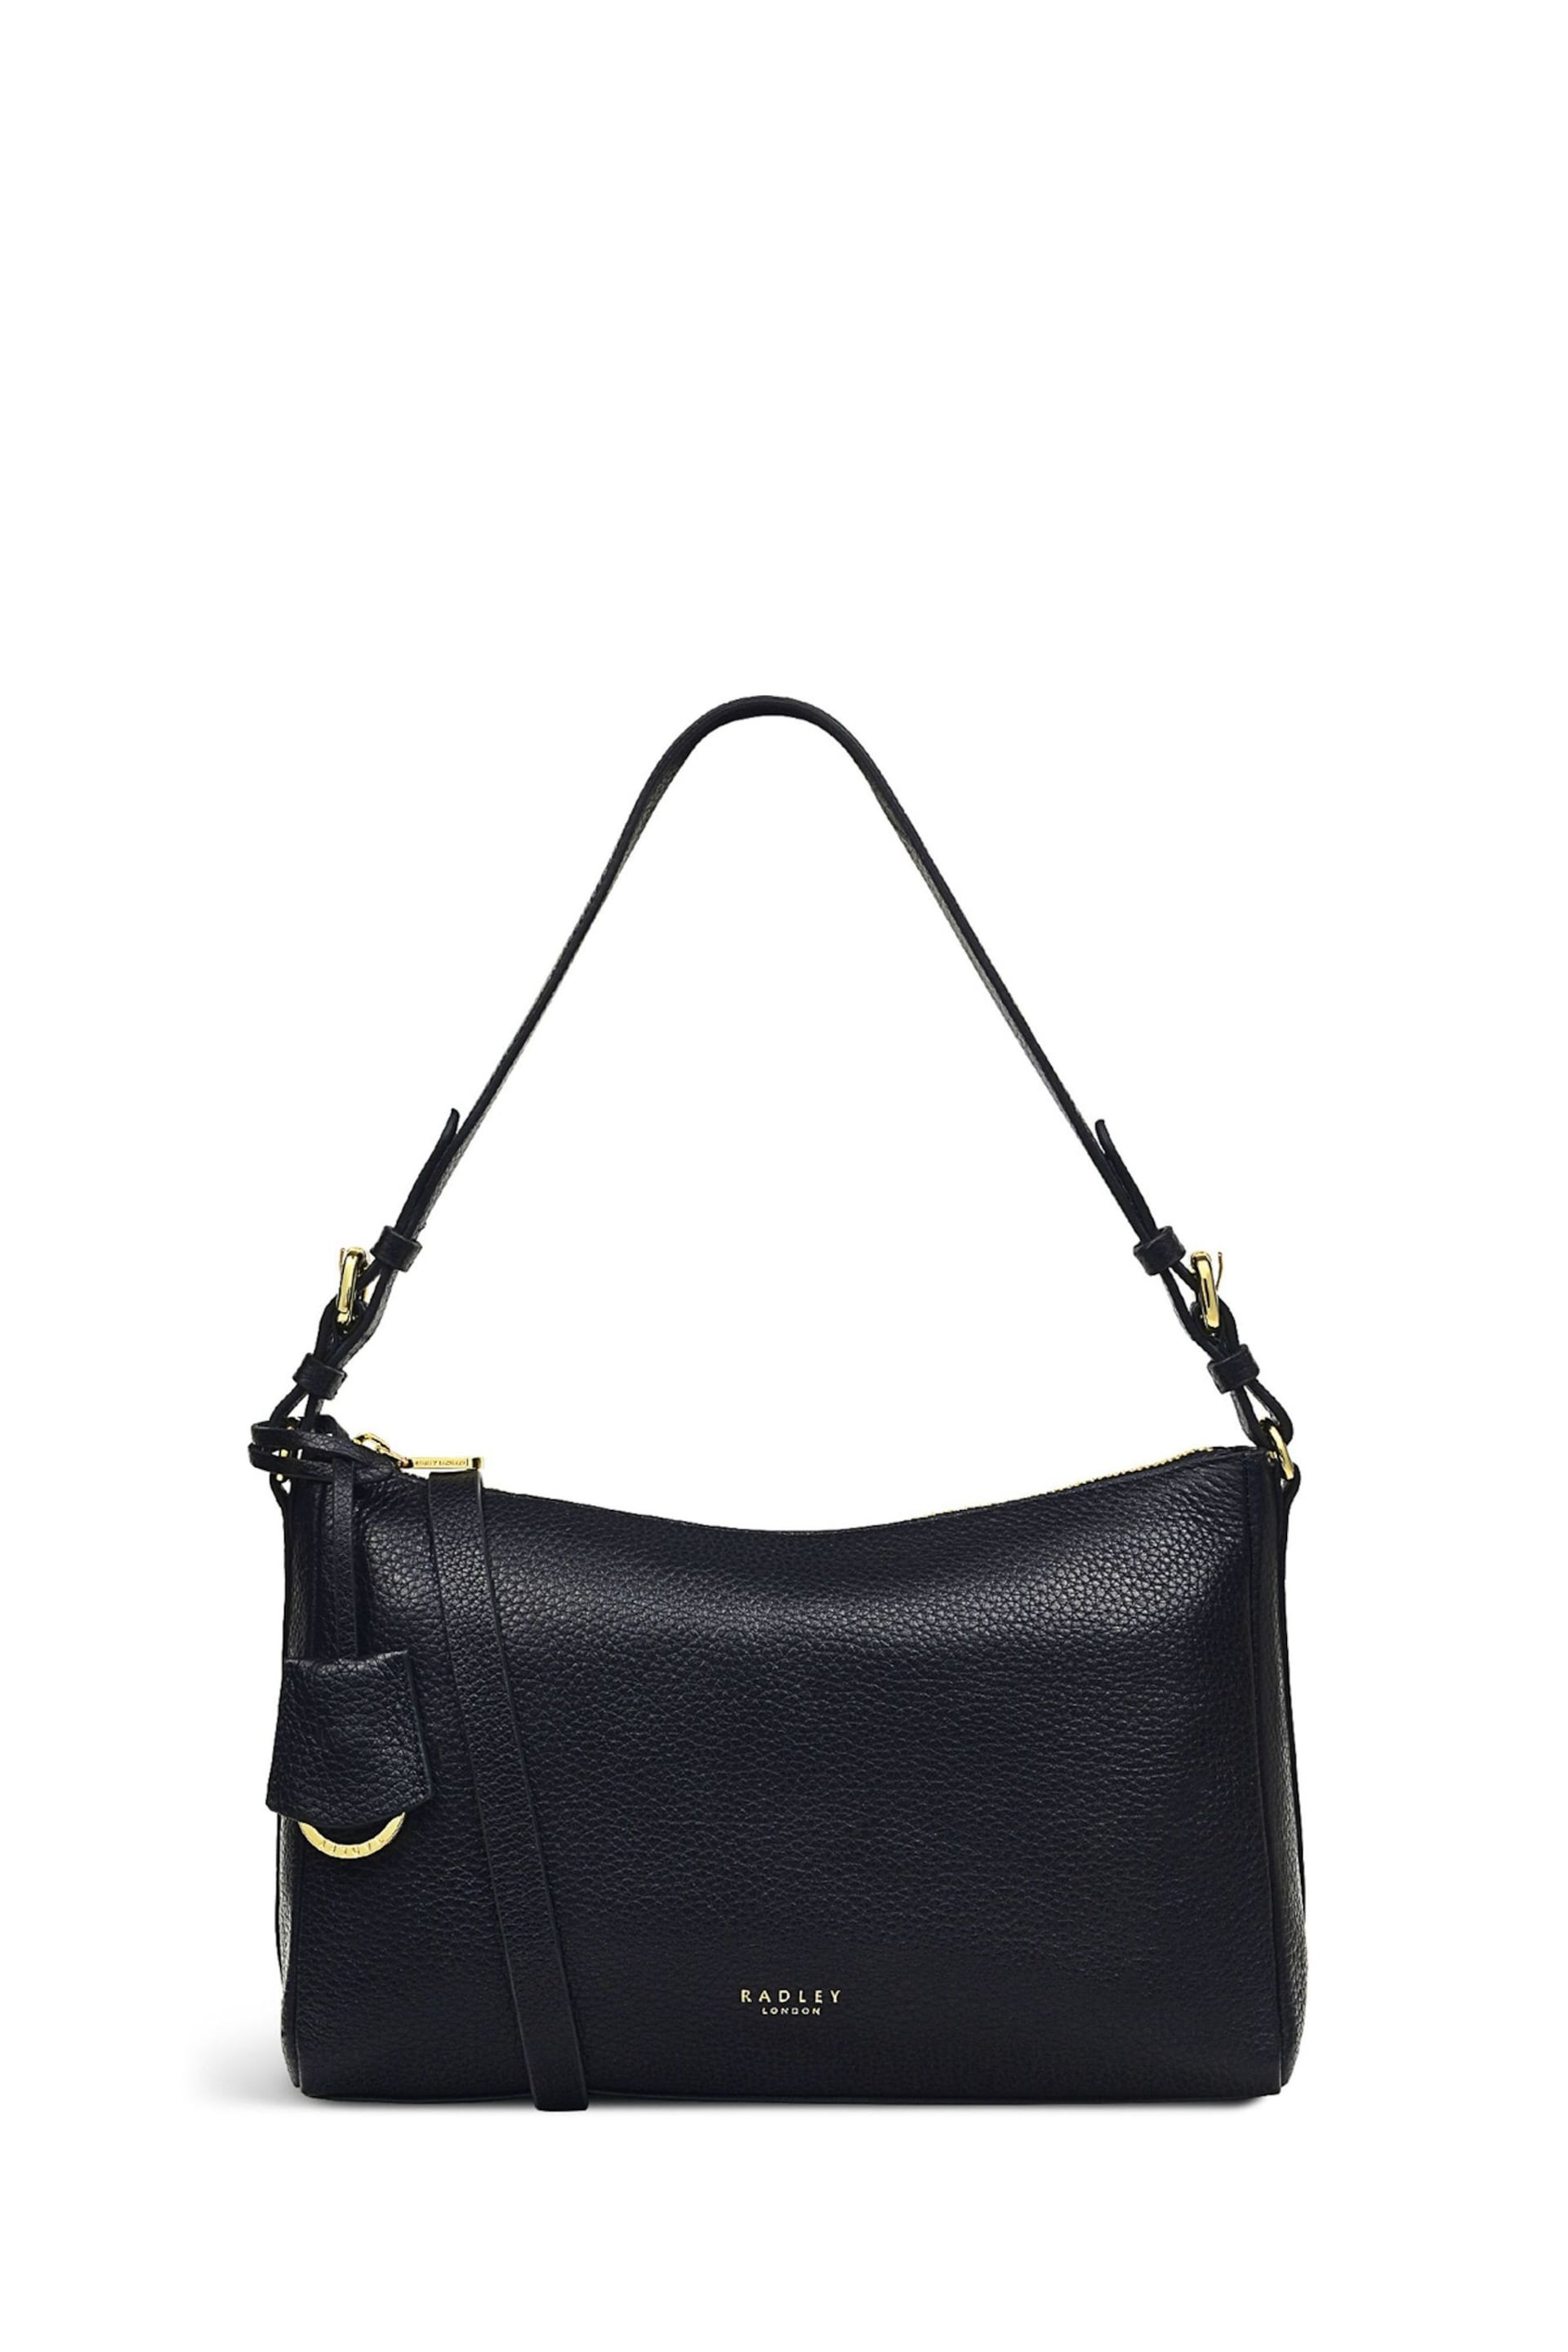 Radley London Medium Dukes Place Zip Top Shoulder Bag - Image 1 of 4